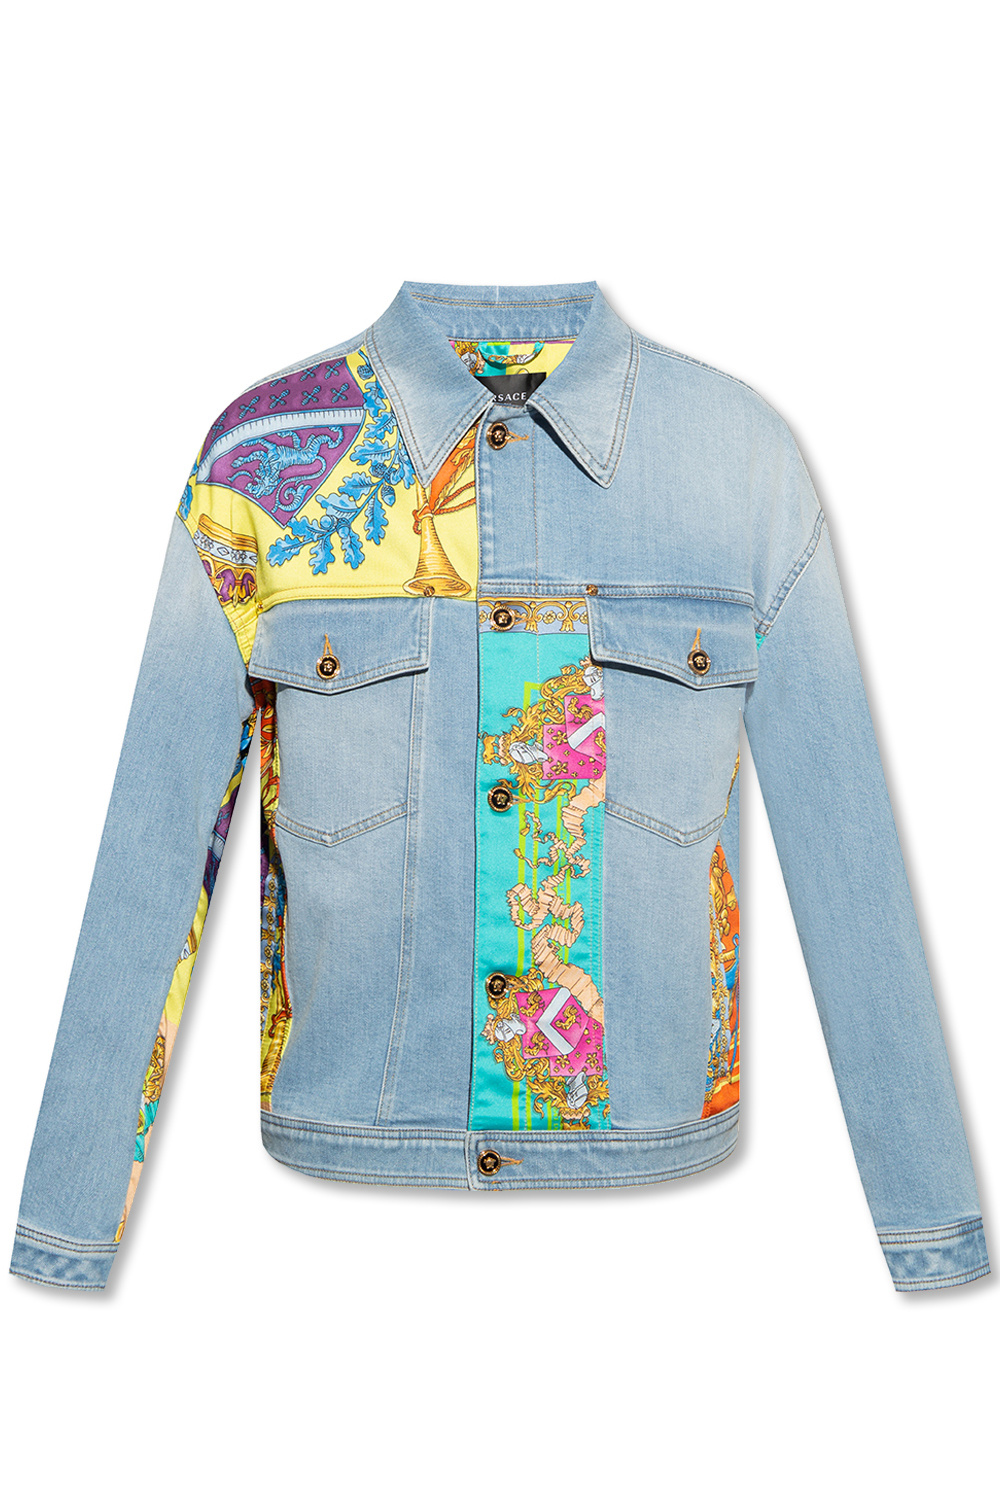 discount 90% Multicolored 58                  EU MEN FASHION Jackets Print NoName blazer 